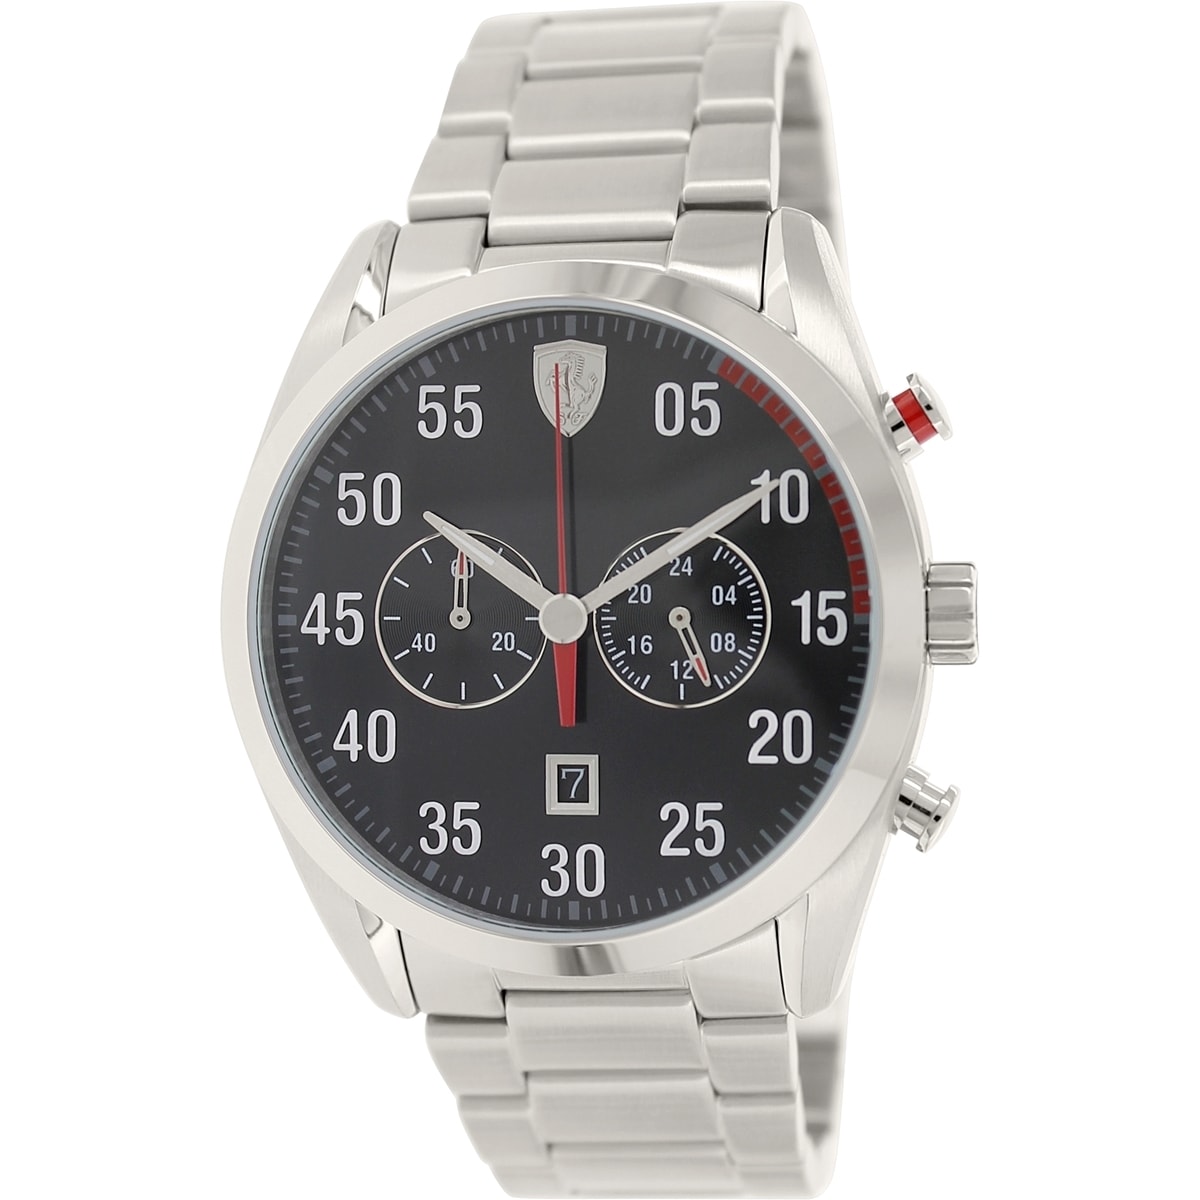 Ferrari Men's D50 0830176 Stainless Steel Analog Quartz Watch